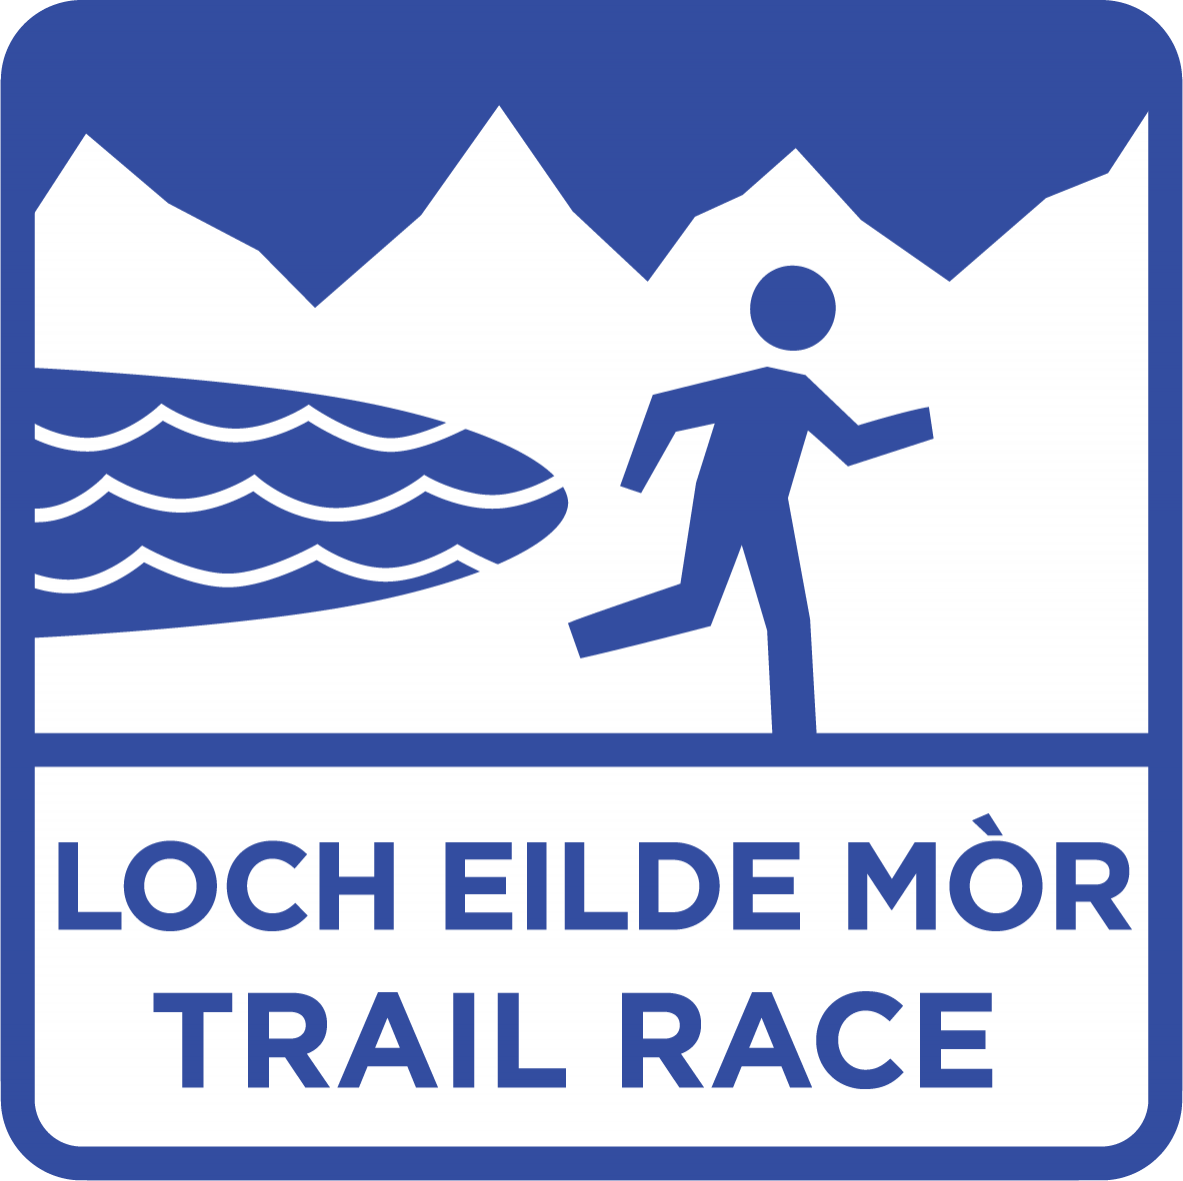 Skyline Scotland - Loch Eilde Mor trail race